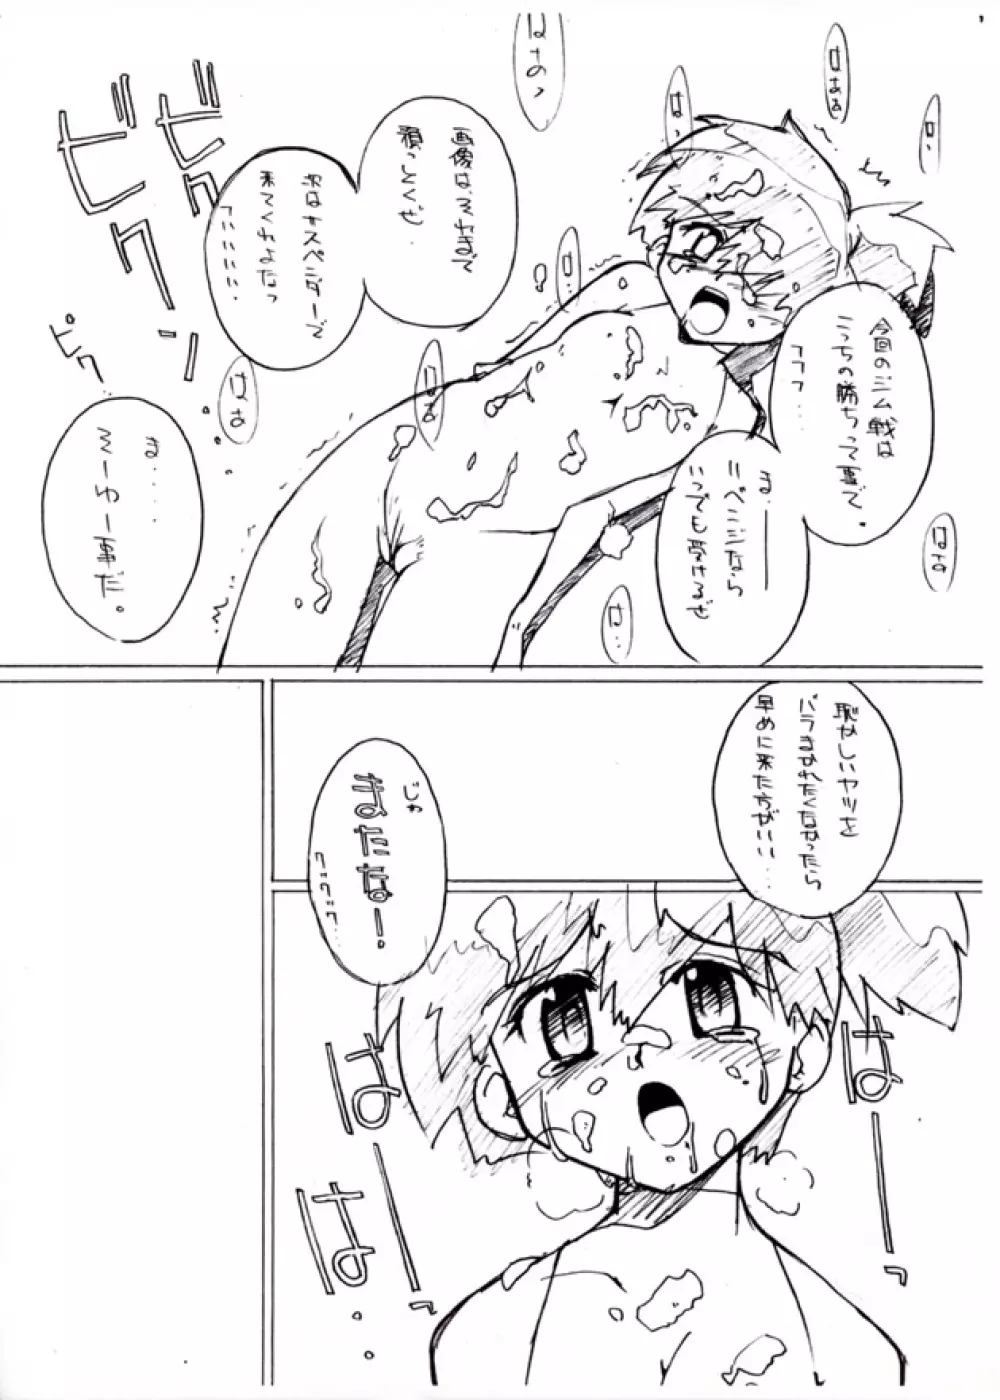 KASUMIX XPLOSION Kasumi Comic part5 - page9